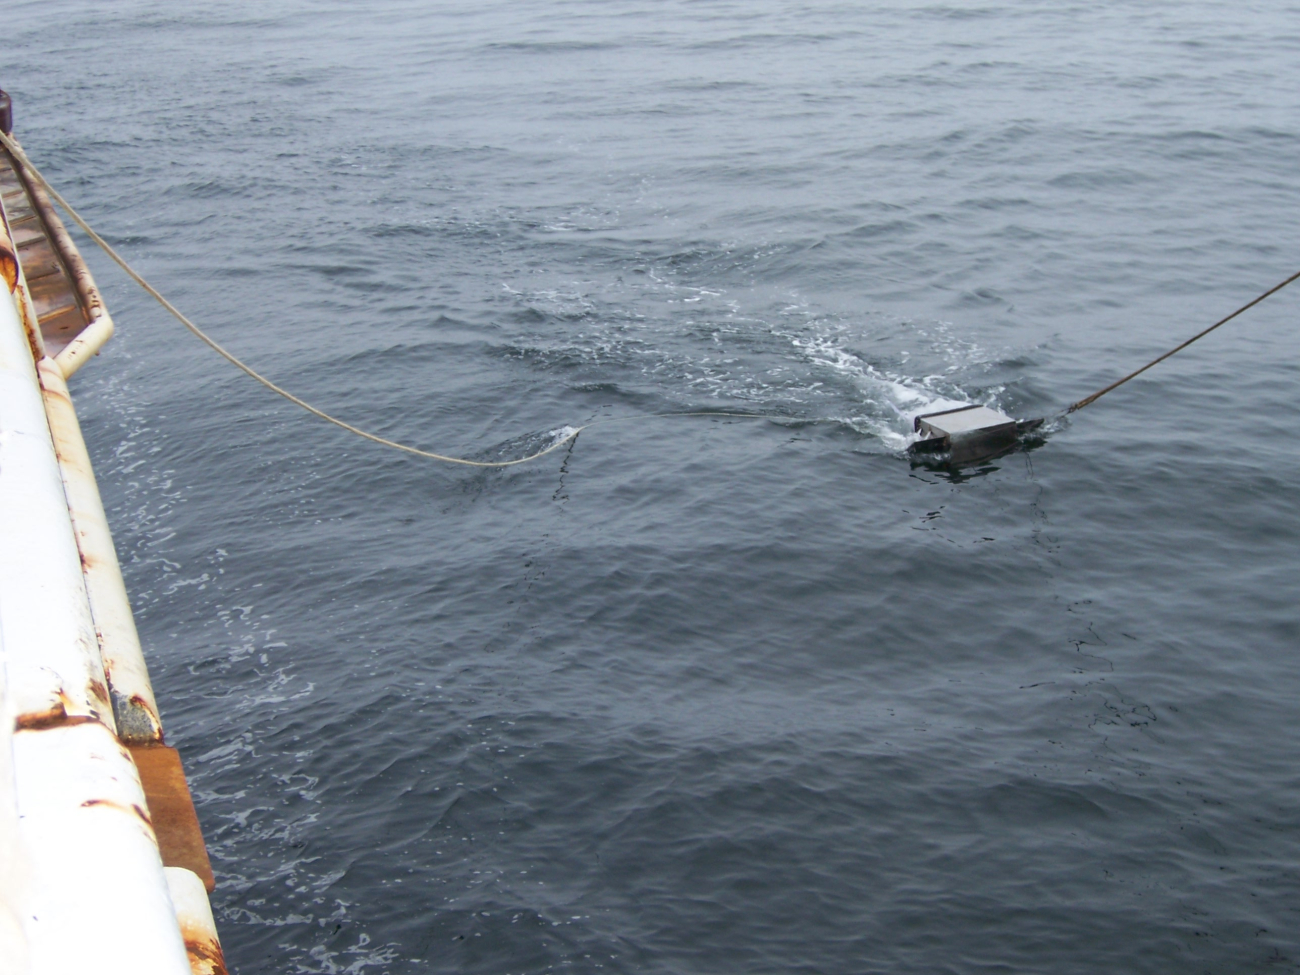 Manta surface tow net deployed